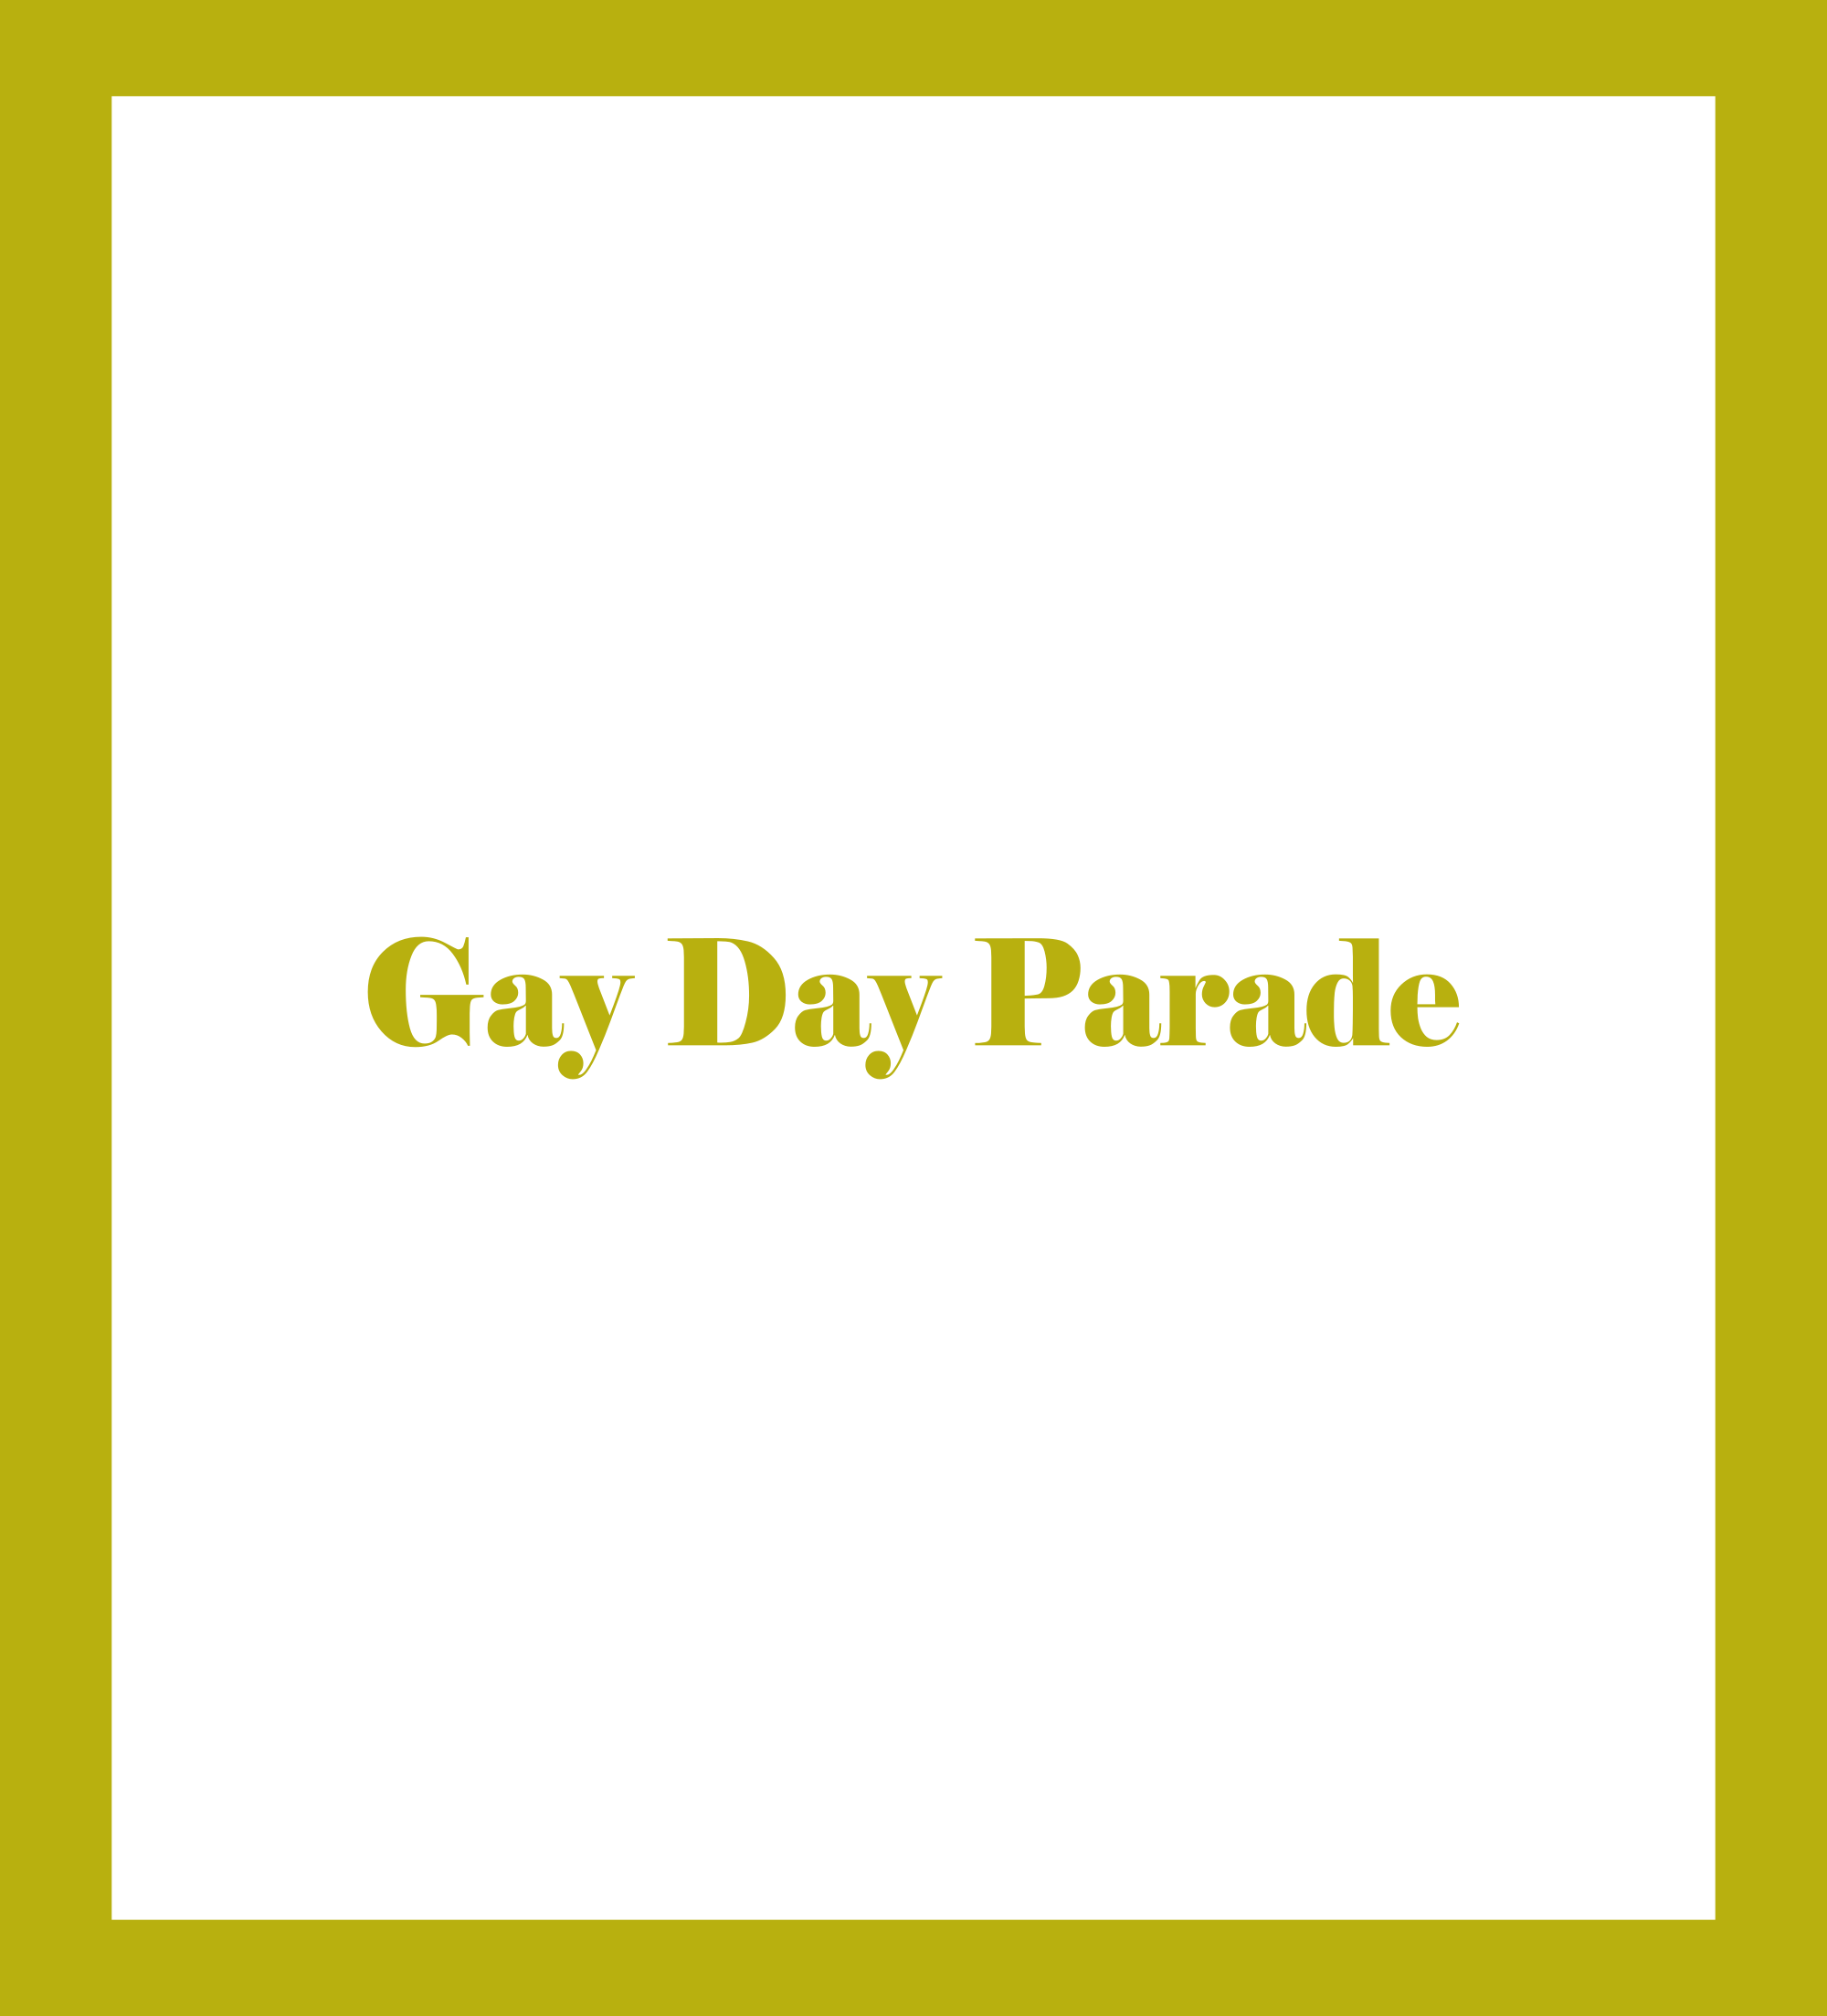 Caratula de Gay Day Parade (Gay Day Parade) 